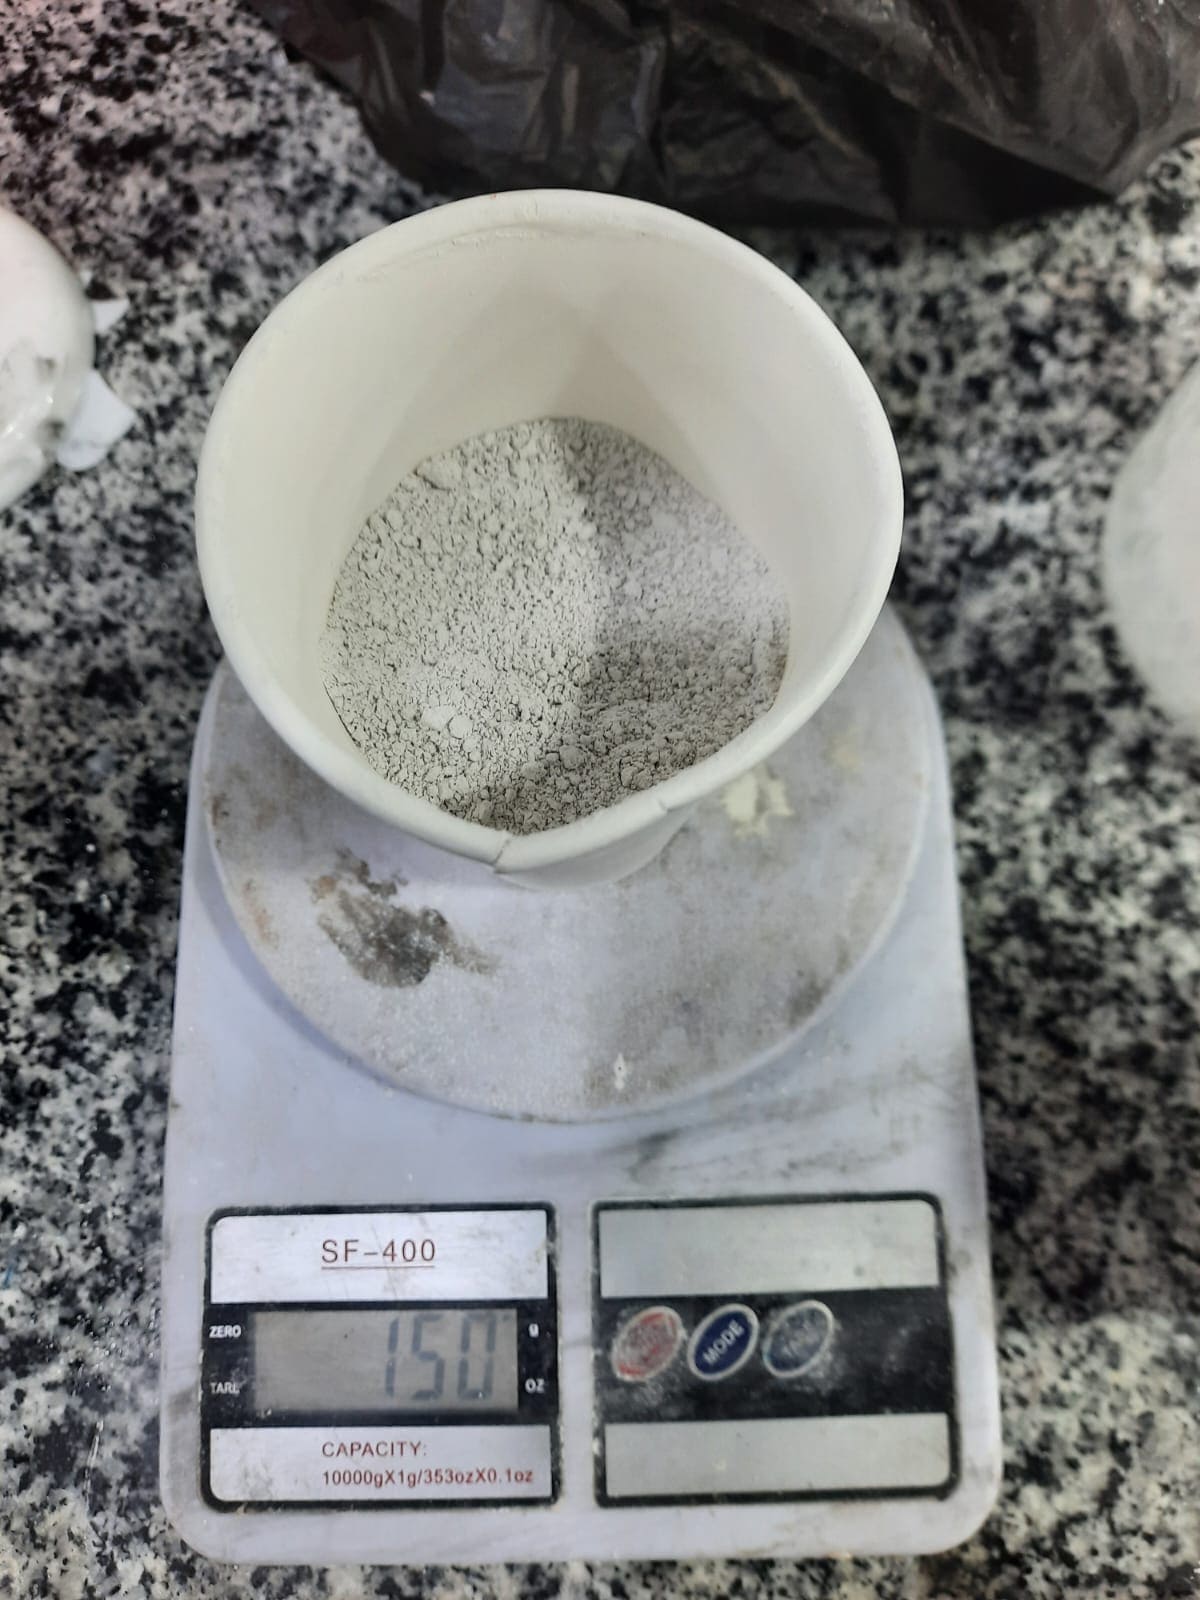 Measuring gypsum powder